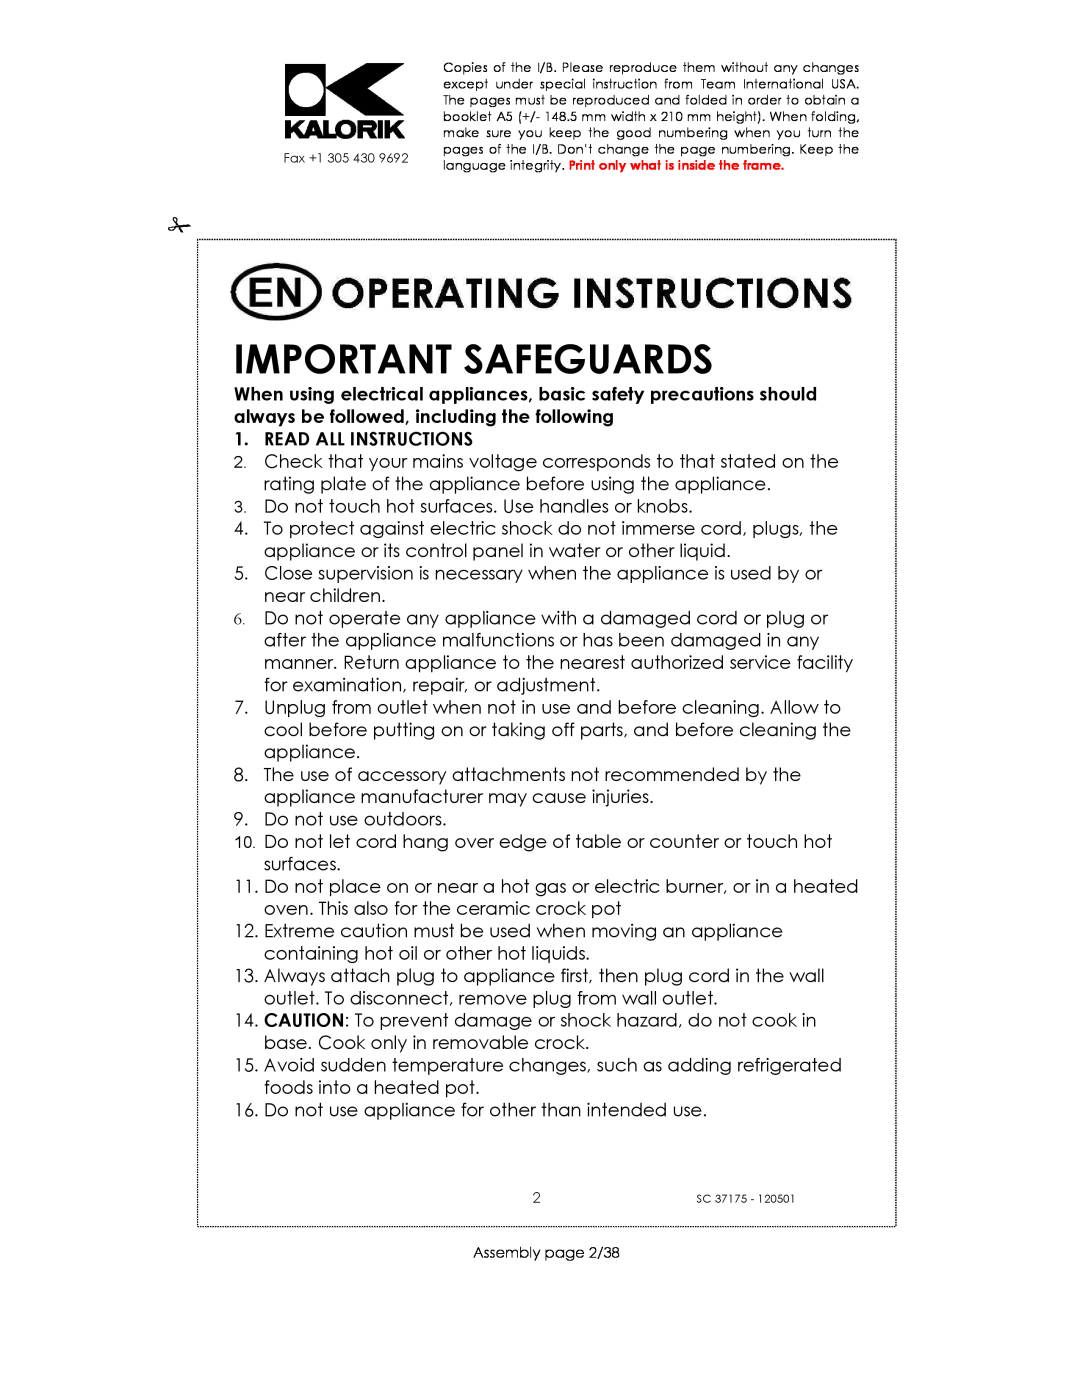 Kalorik SC 37175 manual Important Safeguards, Read All Instructions 